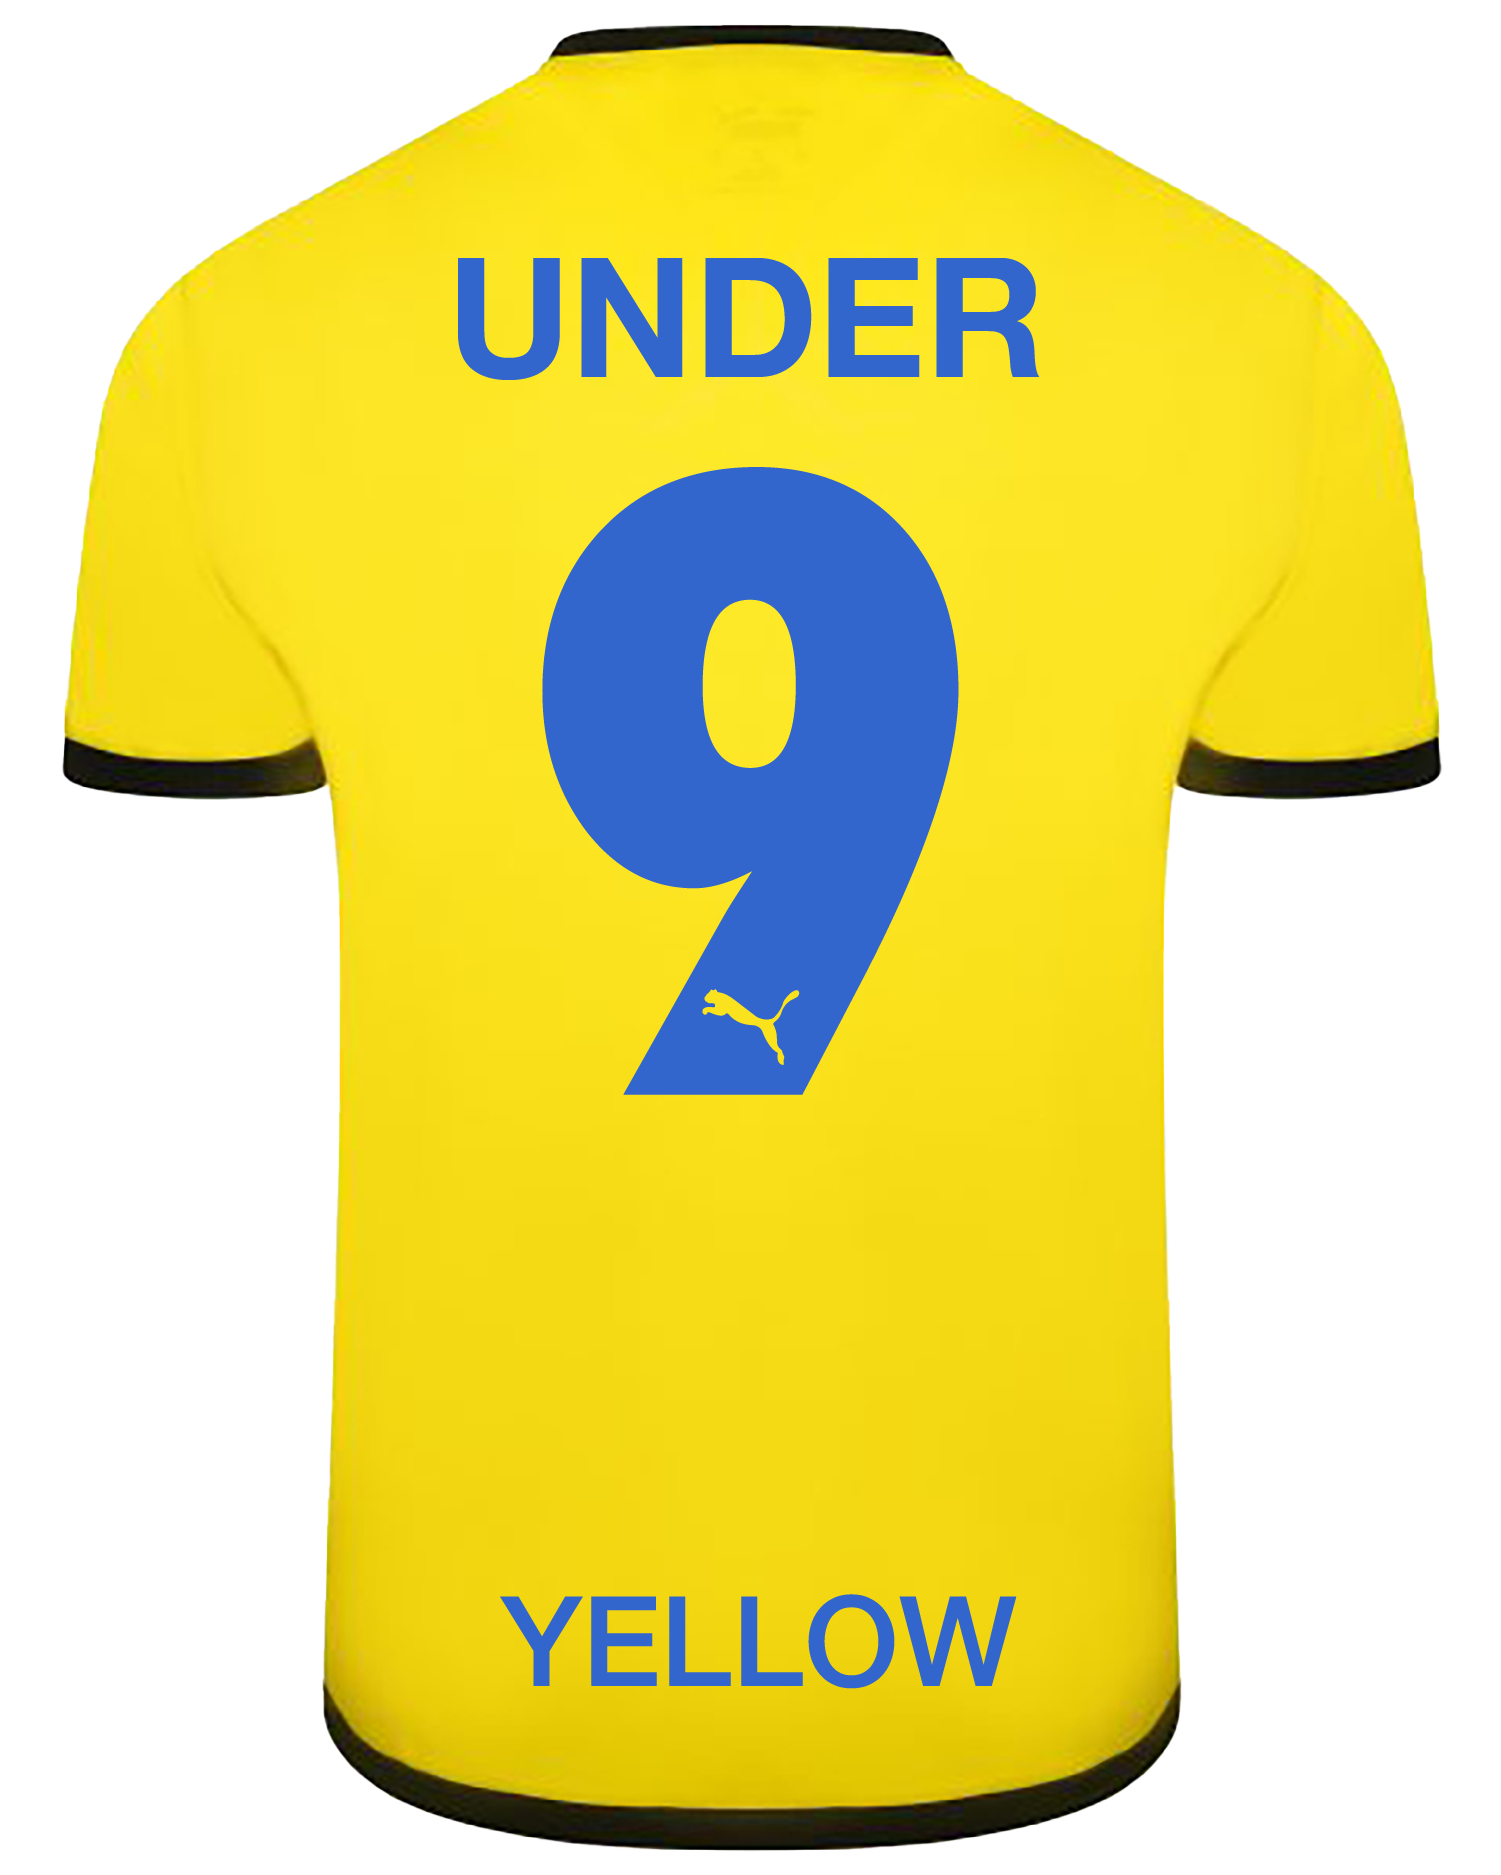 Under 9 (Yellow)